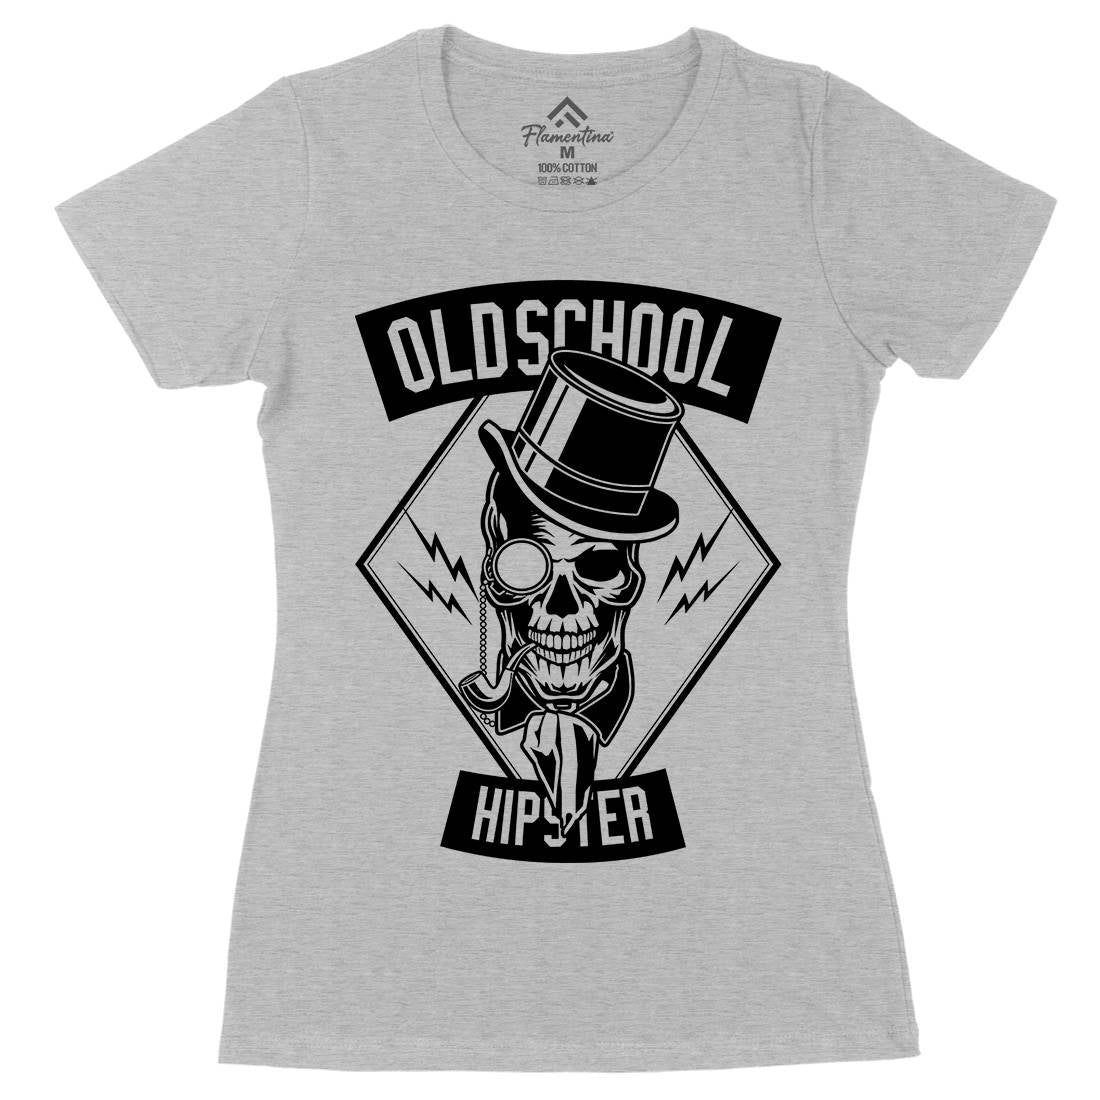 Old School Hipster Womens Organic Crew Neck T-Shirt Retro B592